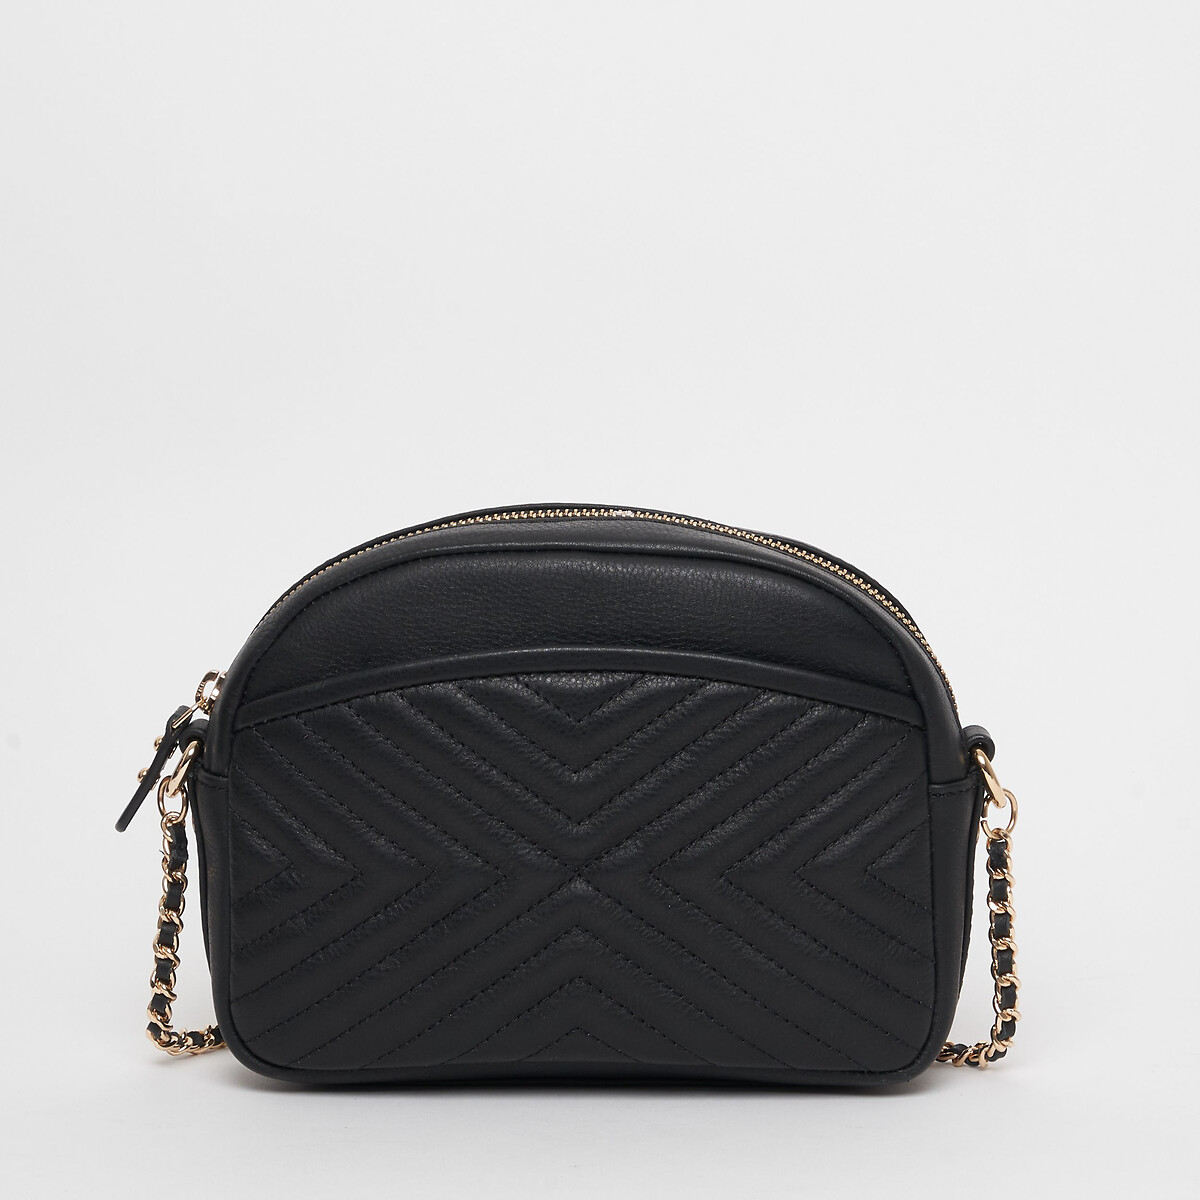 Simone quilted leather crossbody bag, black, Petite Mendigote | La Redoute